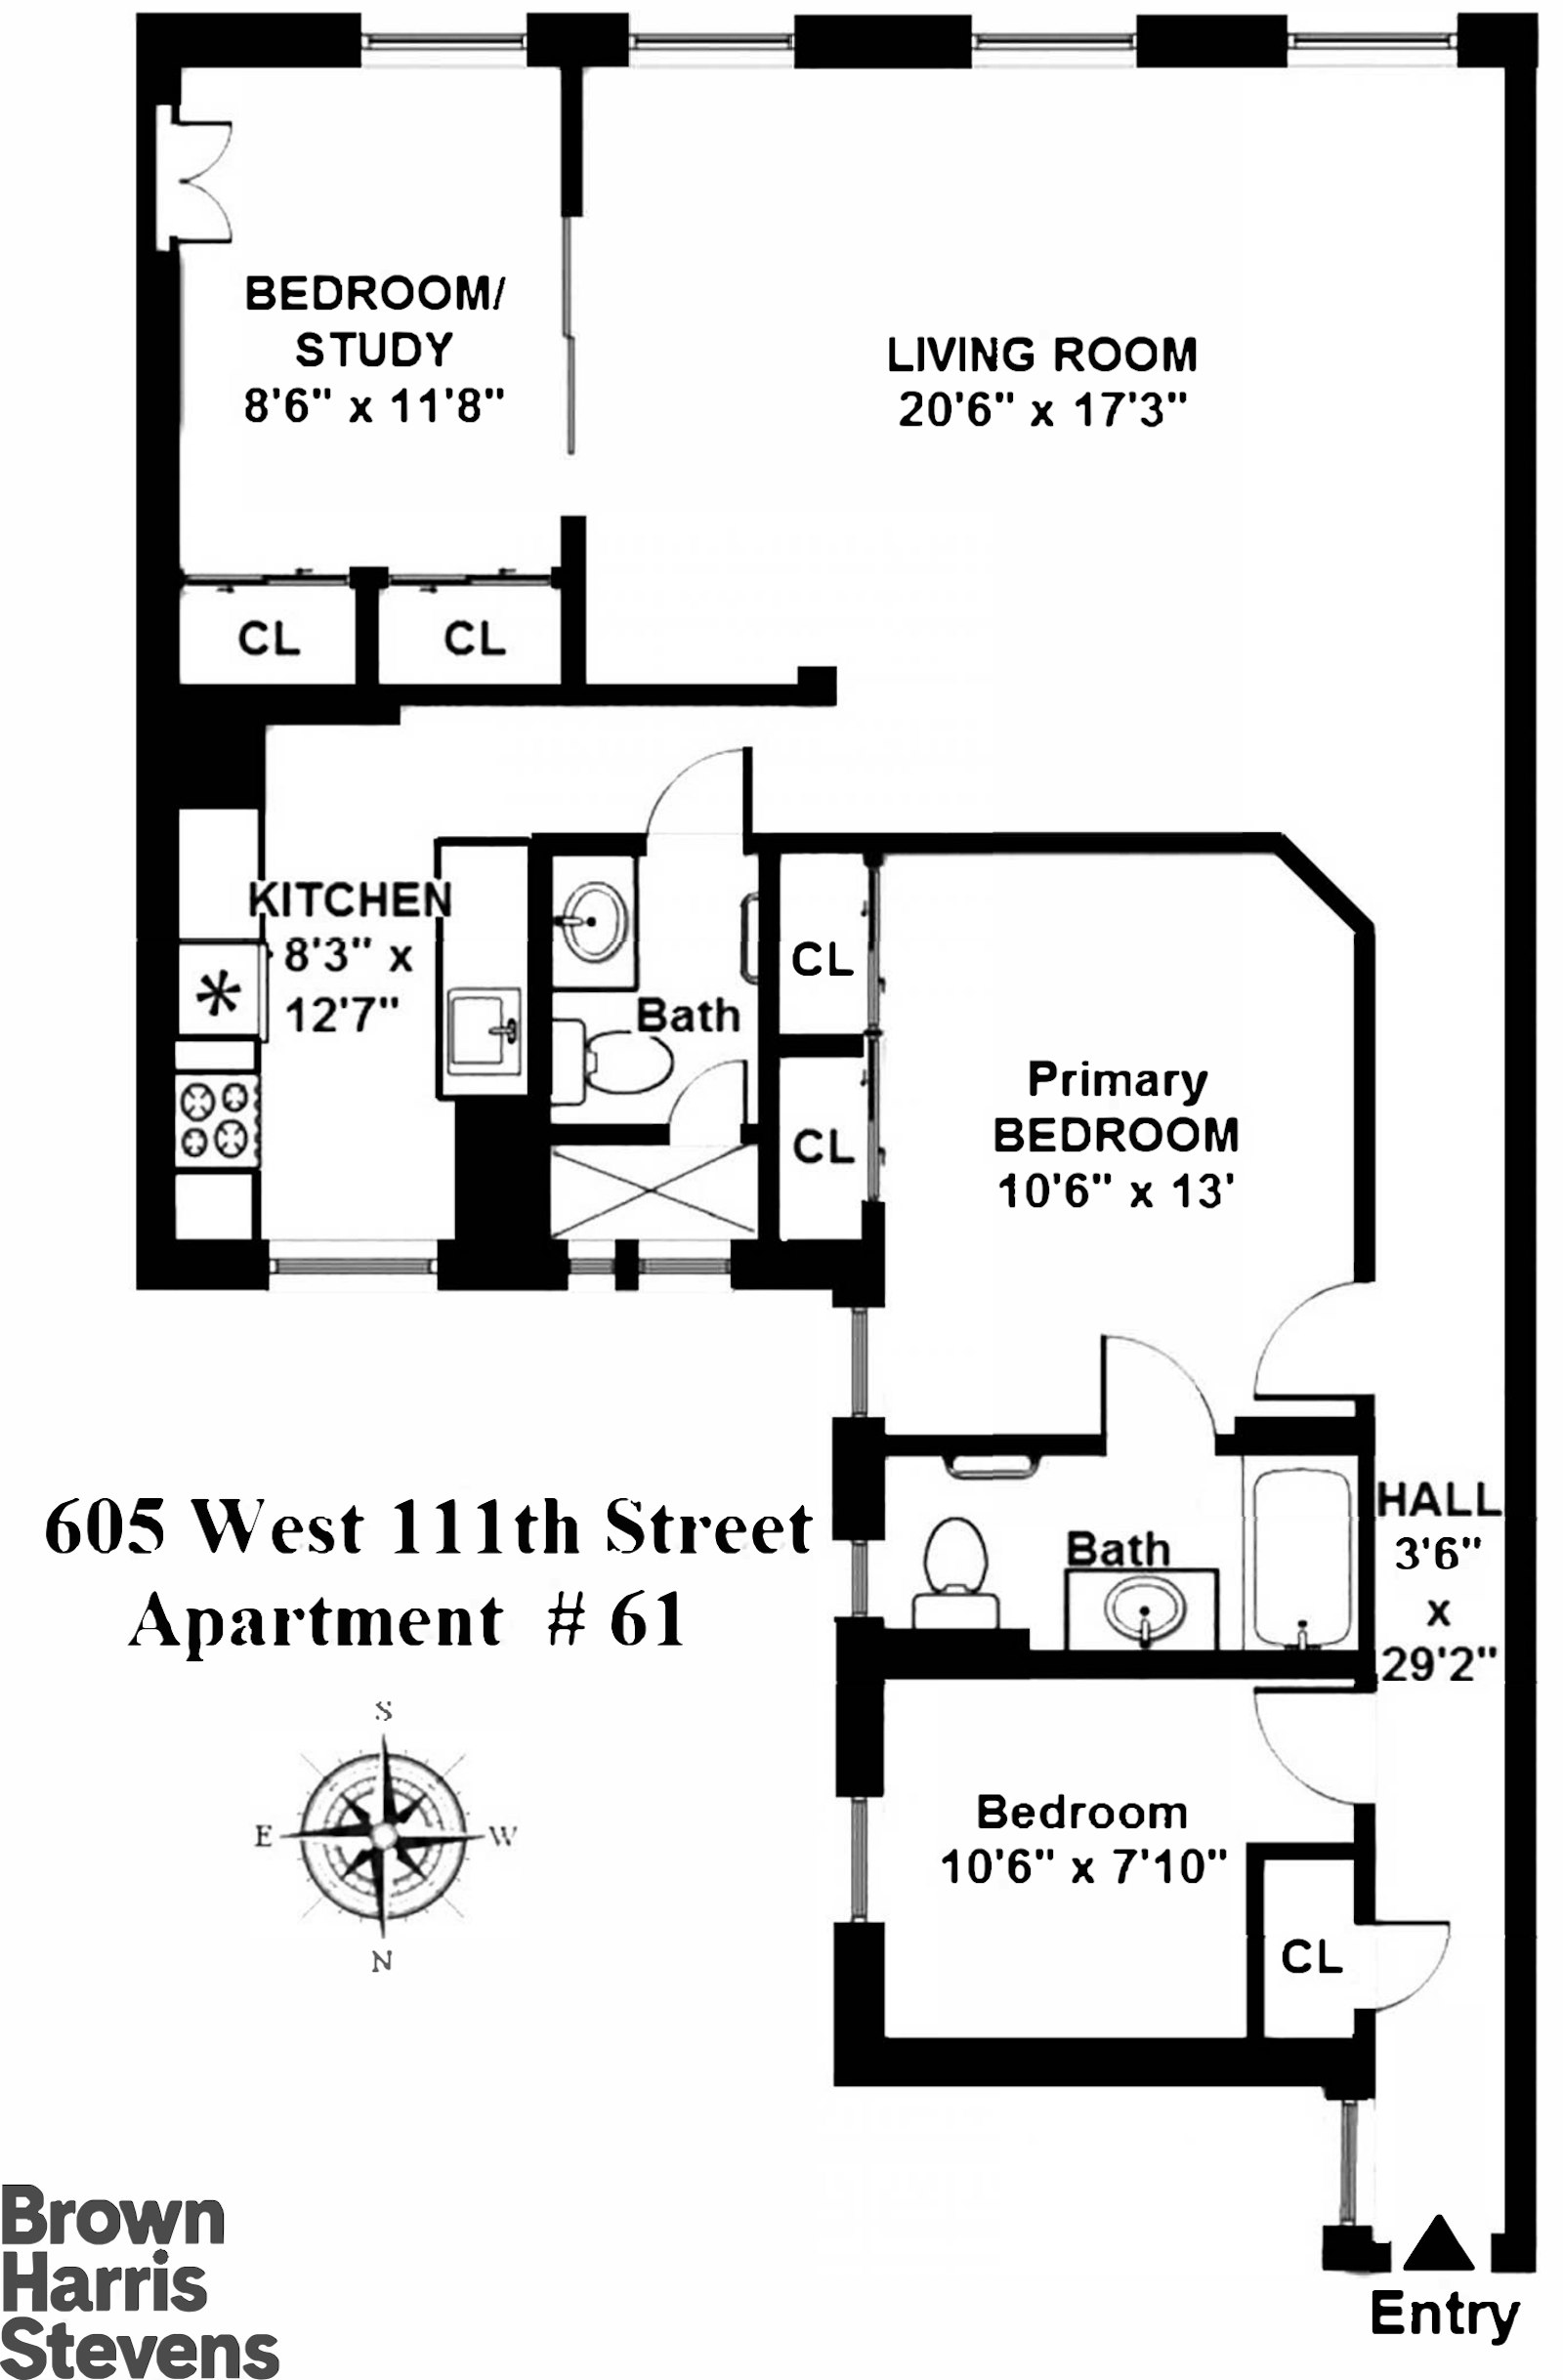 Floorplan for 605 West 111th Street, 61